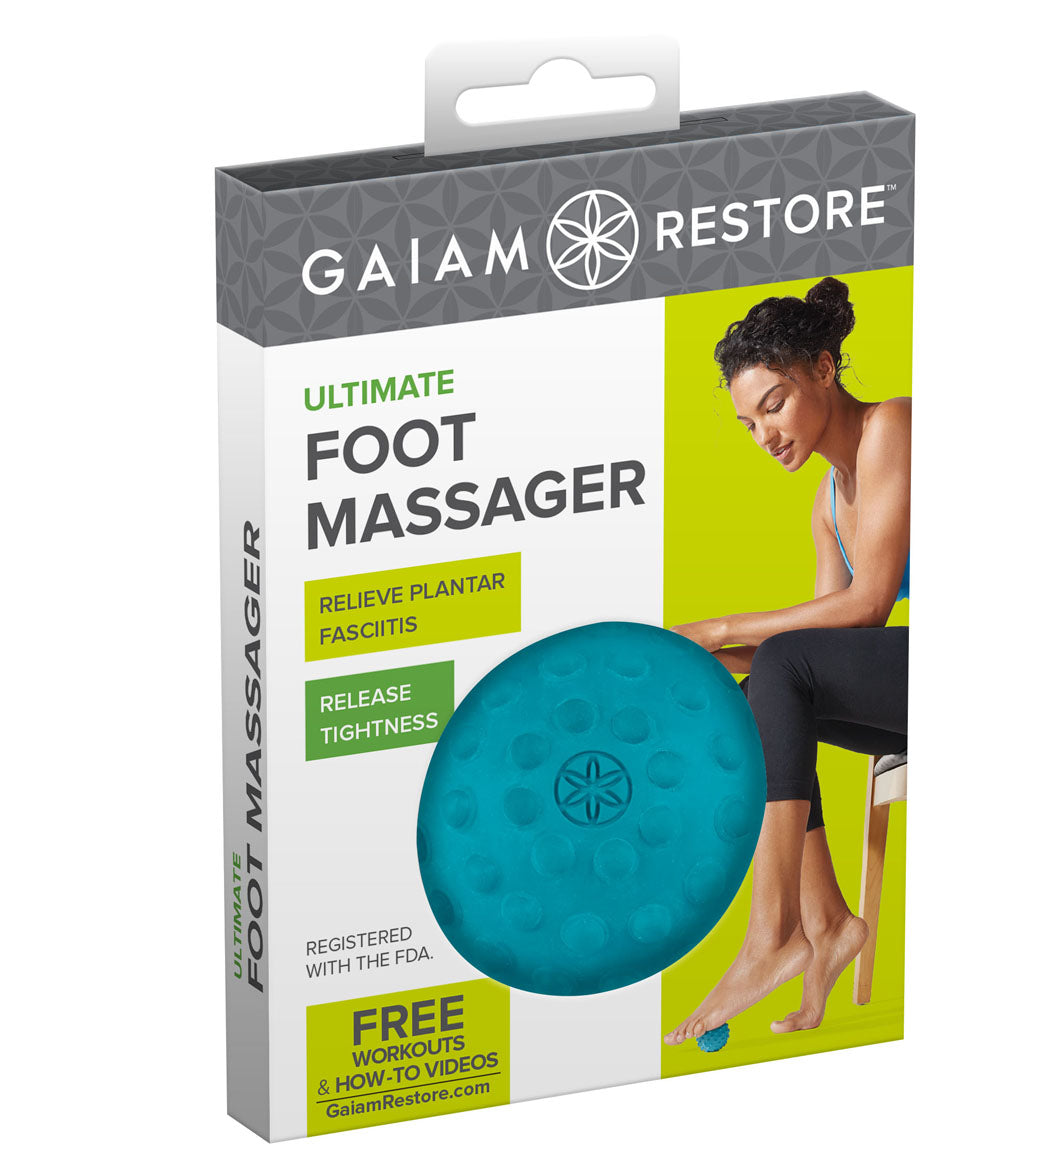 Gaiam Restore Ultimate Foot Massager at